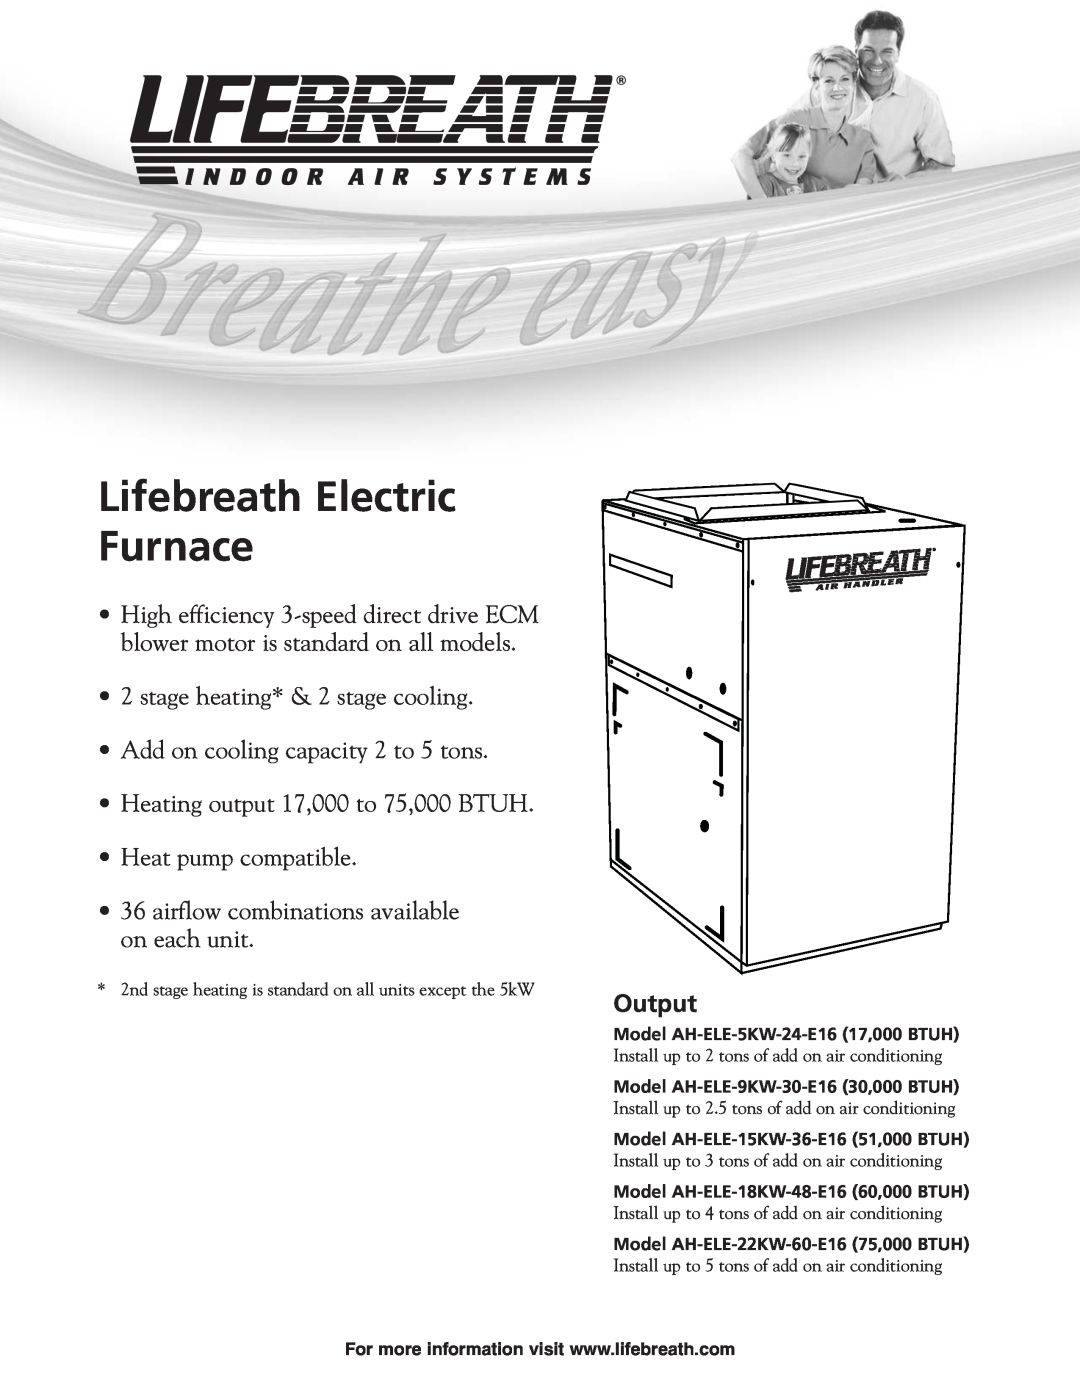 Lifebreath AH-ELE-15KW-36-E16, AH-ELE-5KW-24-E16, AH-ELE-9KW-30-E16 manual Lifebreath Electric Furnace, Output 